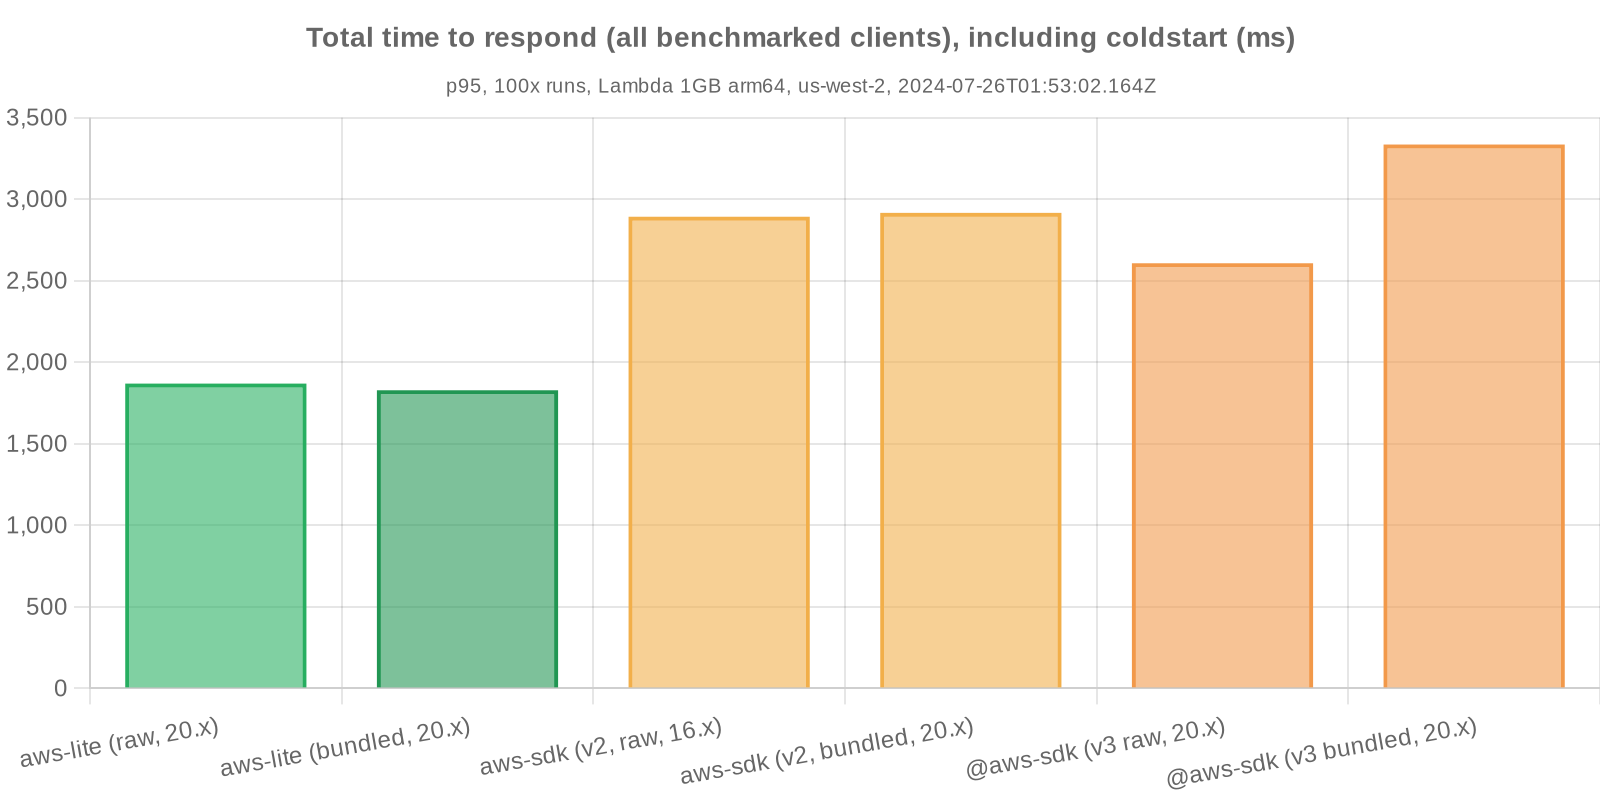 Benchmark statistics - Total time to respond, including coldstart